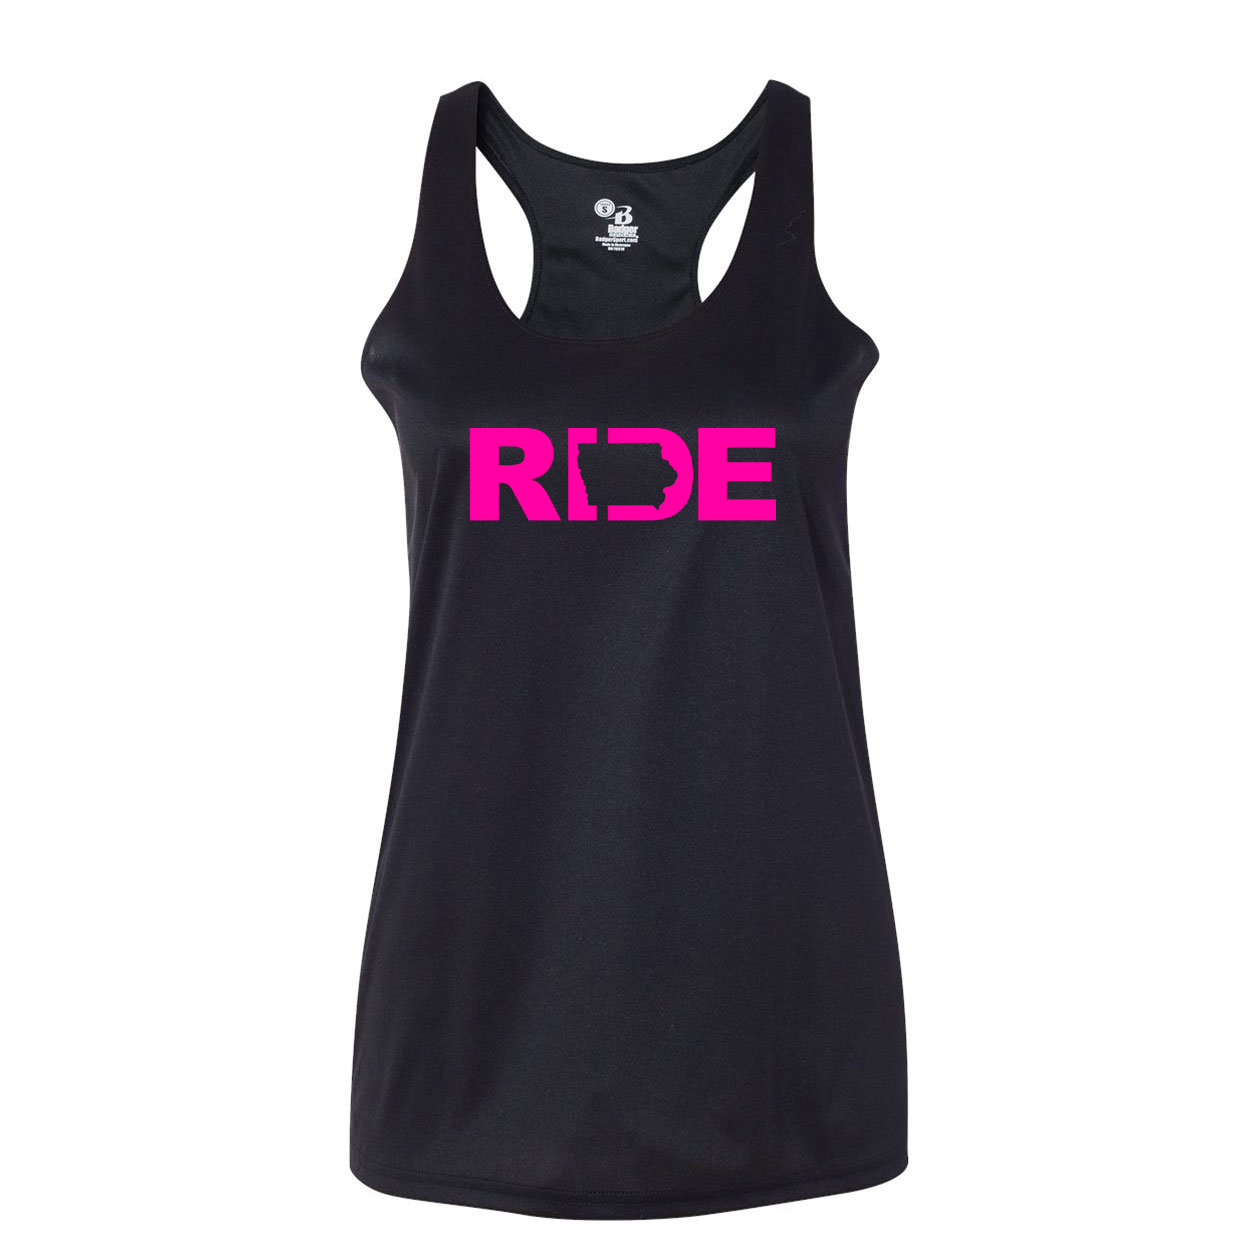 Ride Iowa Classic Womens Performance Racerback Tank Top Black (Pink Logo)